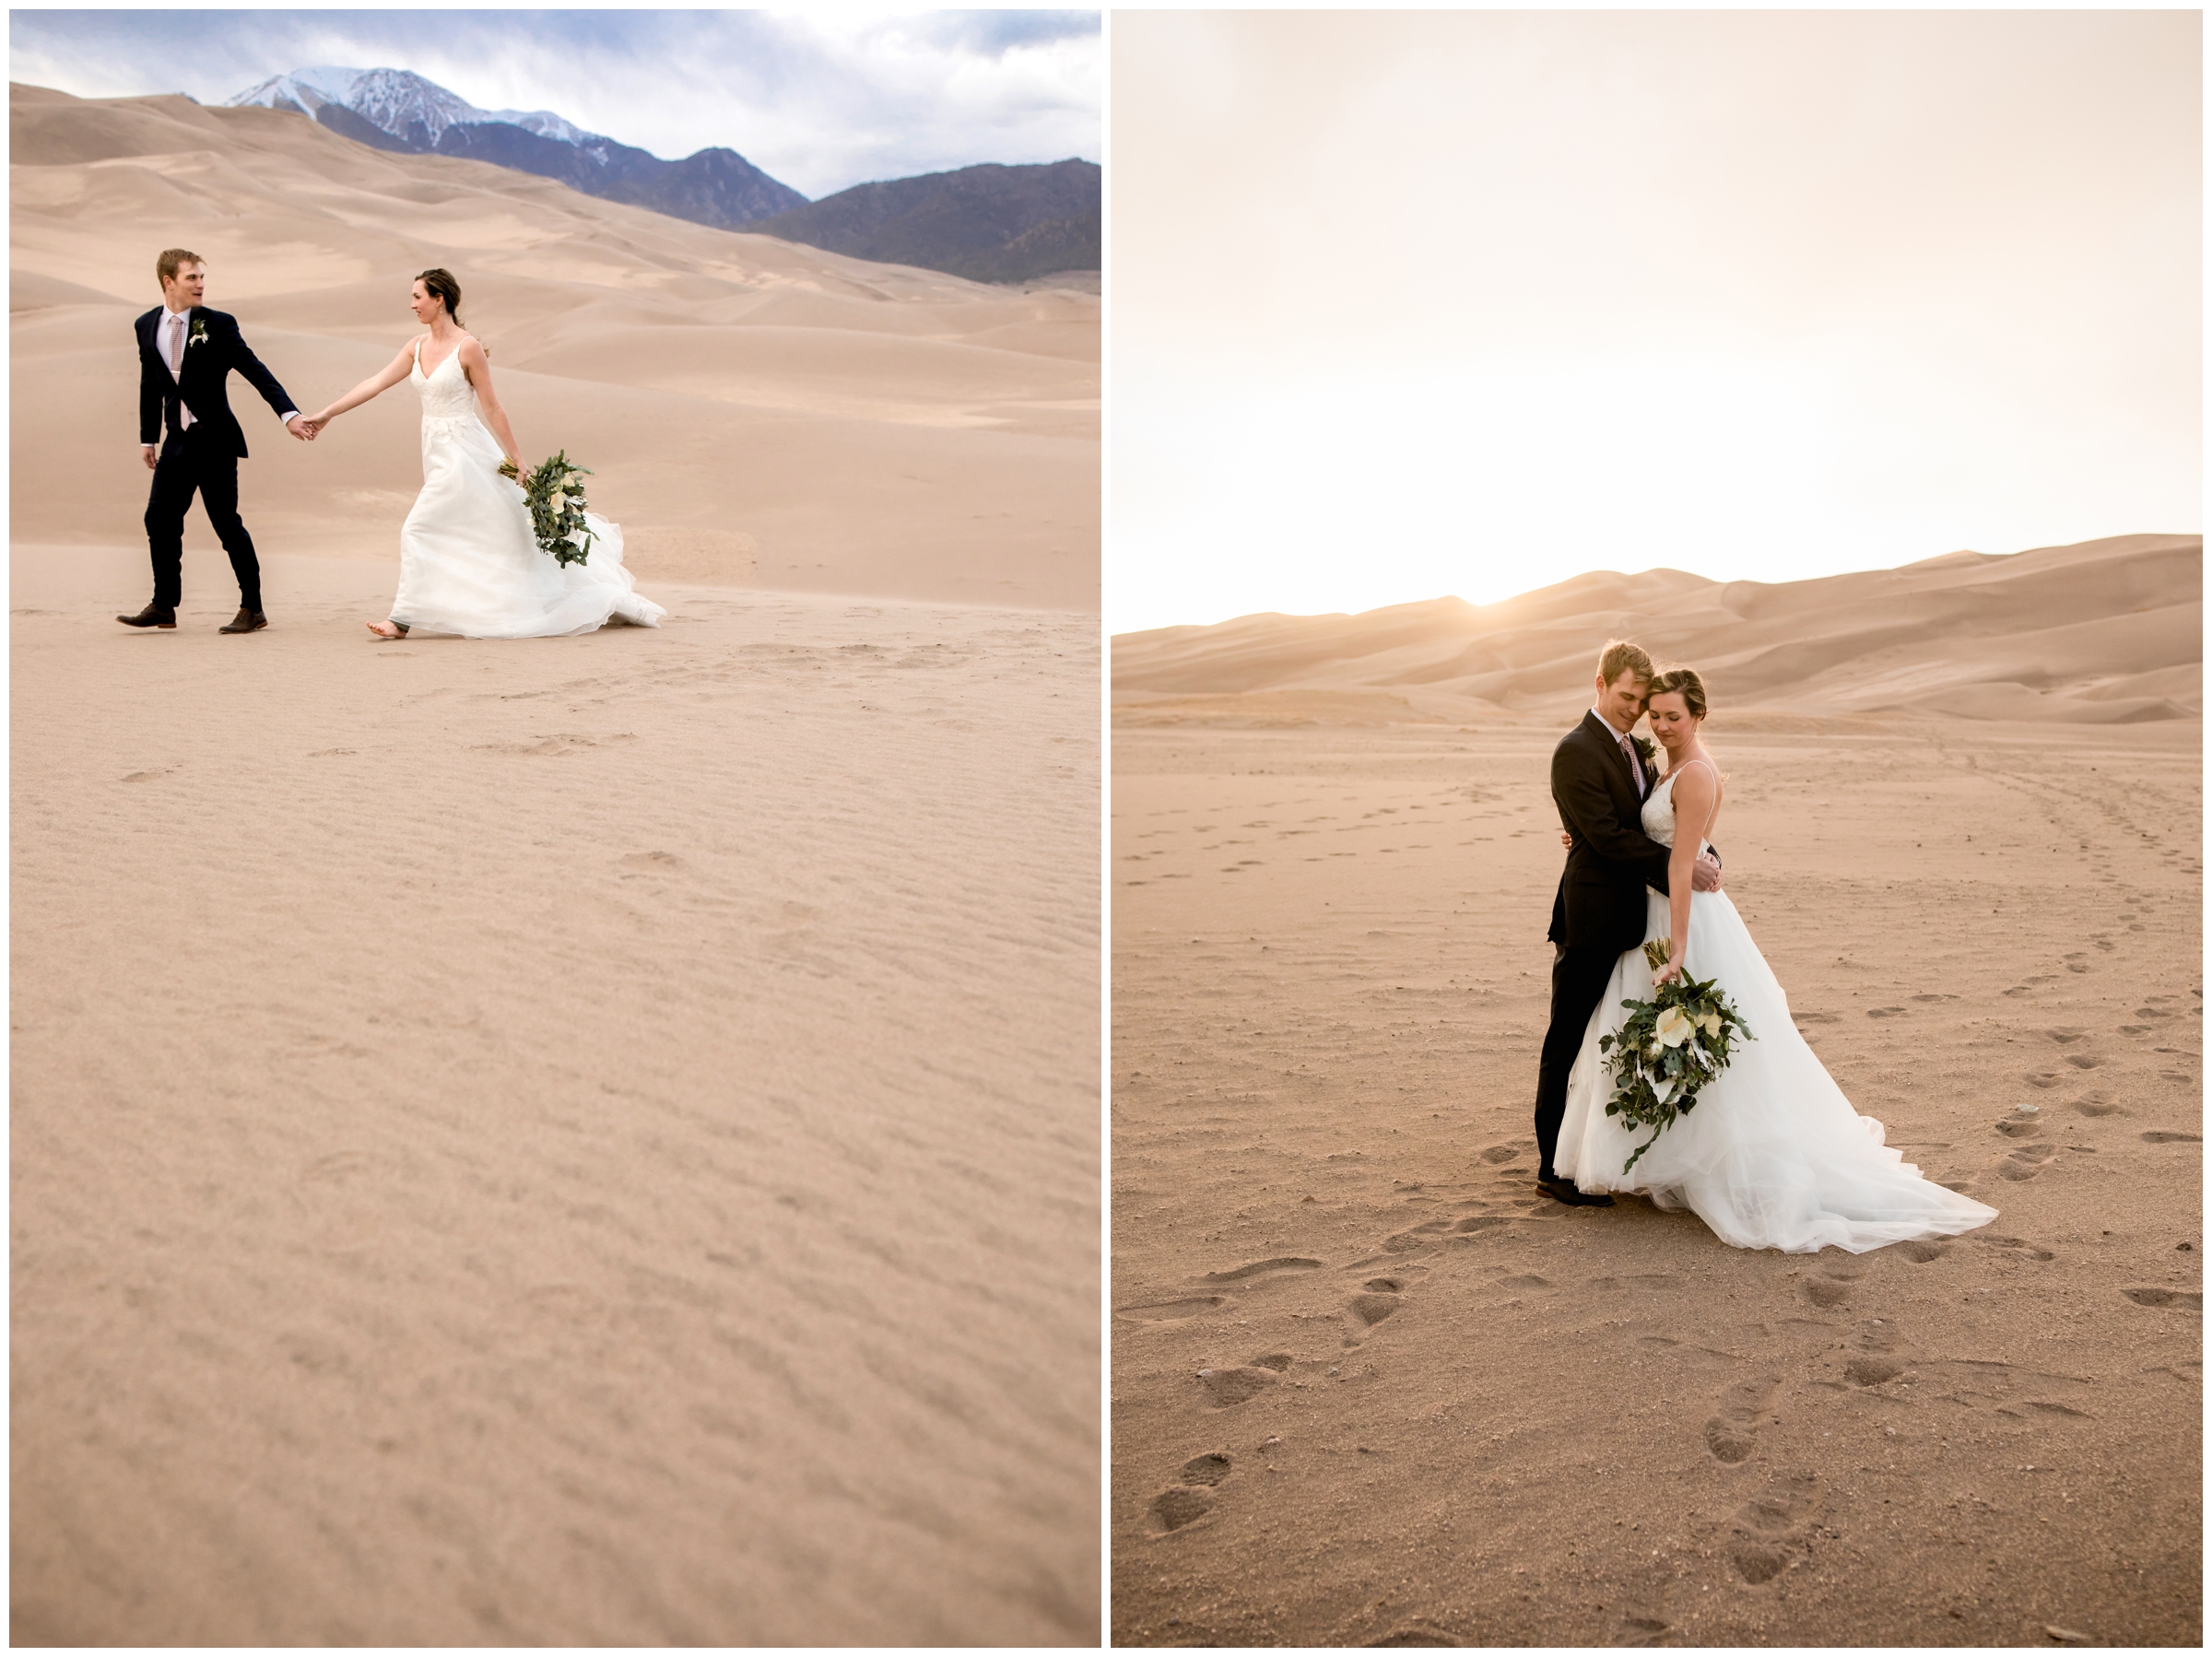 adventure Colorado elopement photography inspiration at Great Sand Dunes